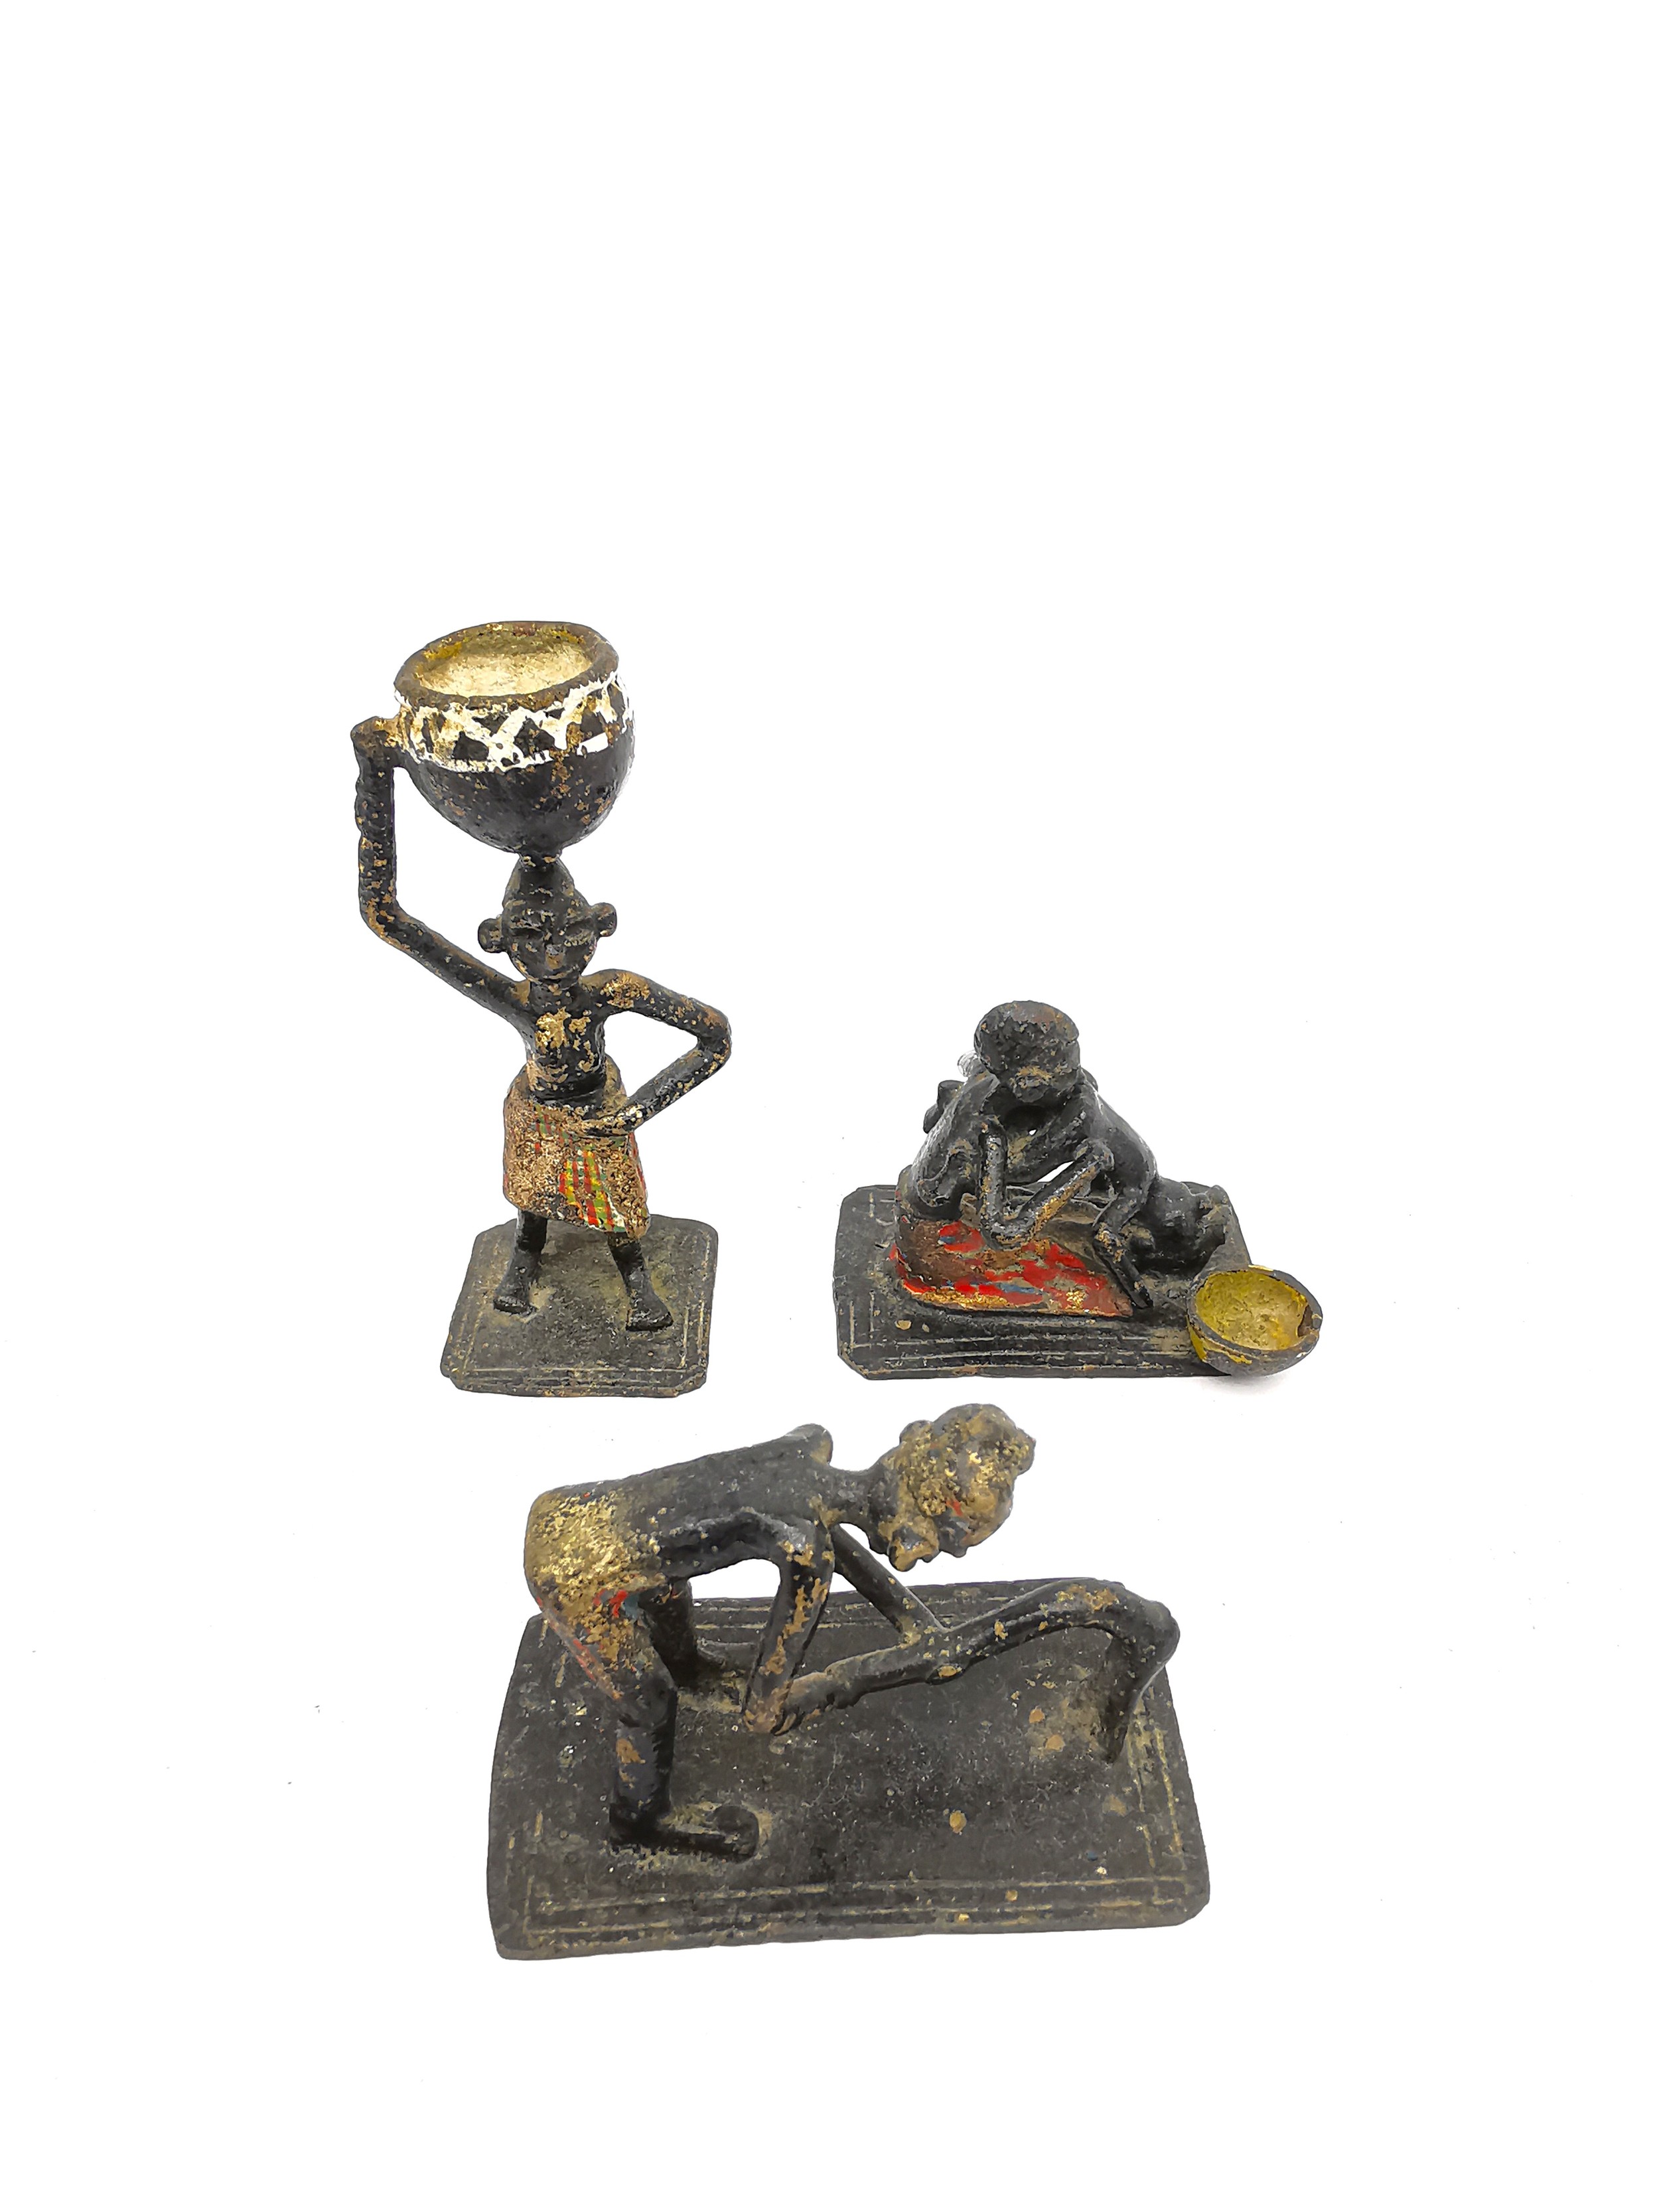 Seven miniature African tribal painted metal figures depicting various everyday activities. - Image 4 of 4